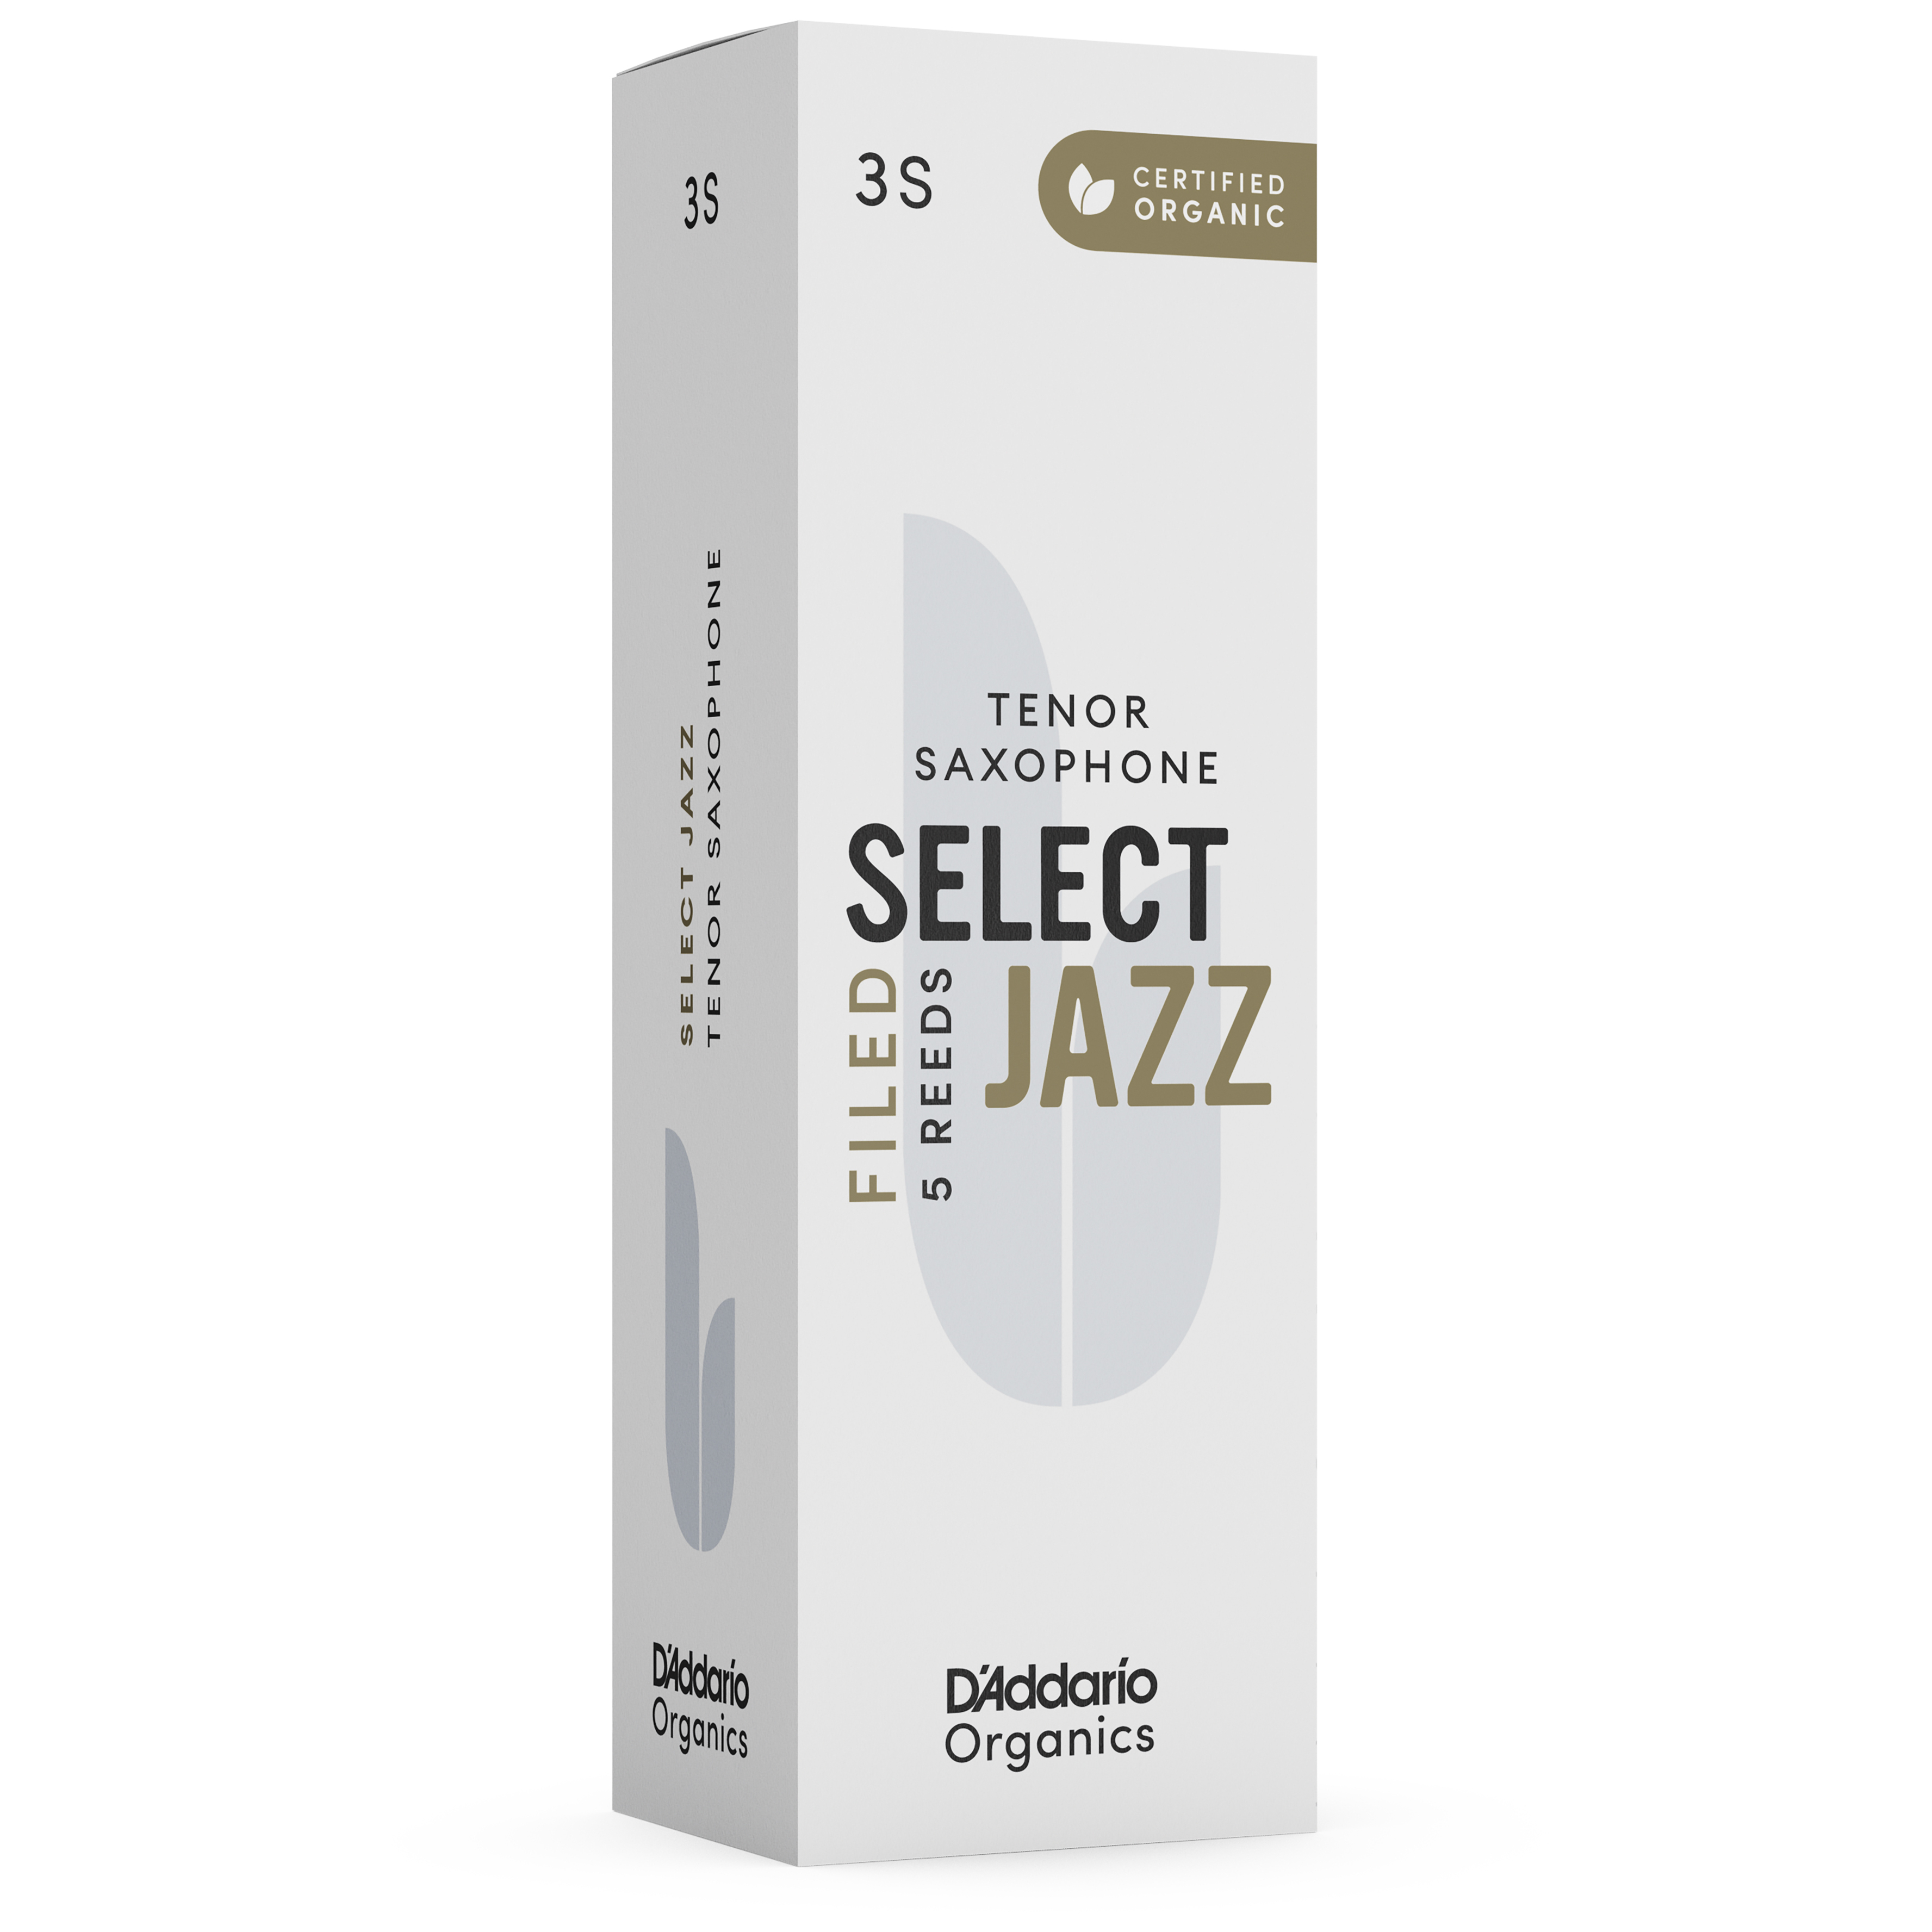 D’Addario Woodwinds Organic Select Jazz Filed - Tenor Saxophone 3S - 5er Pack 3